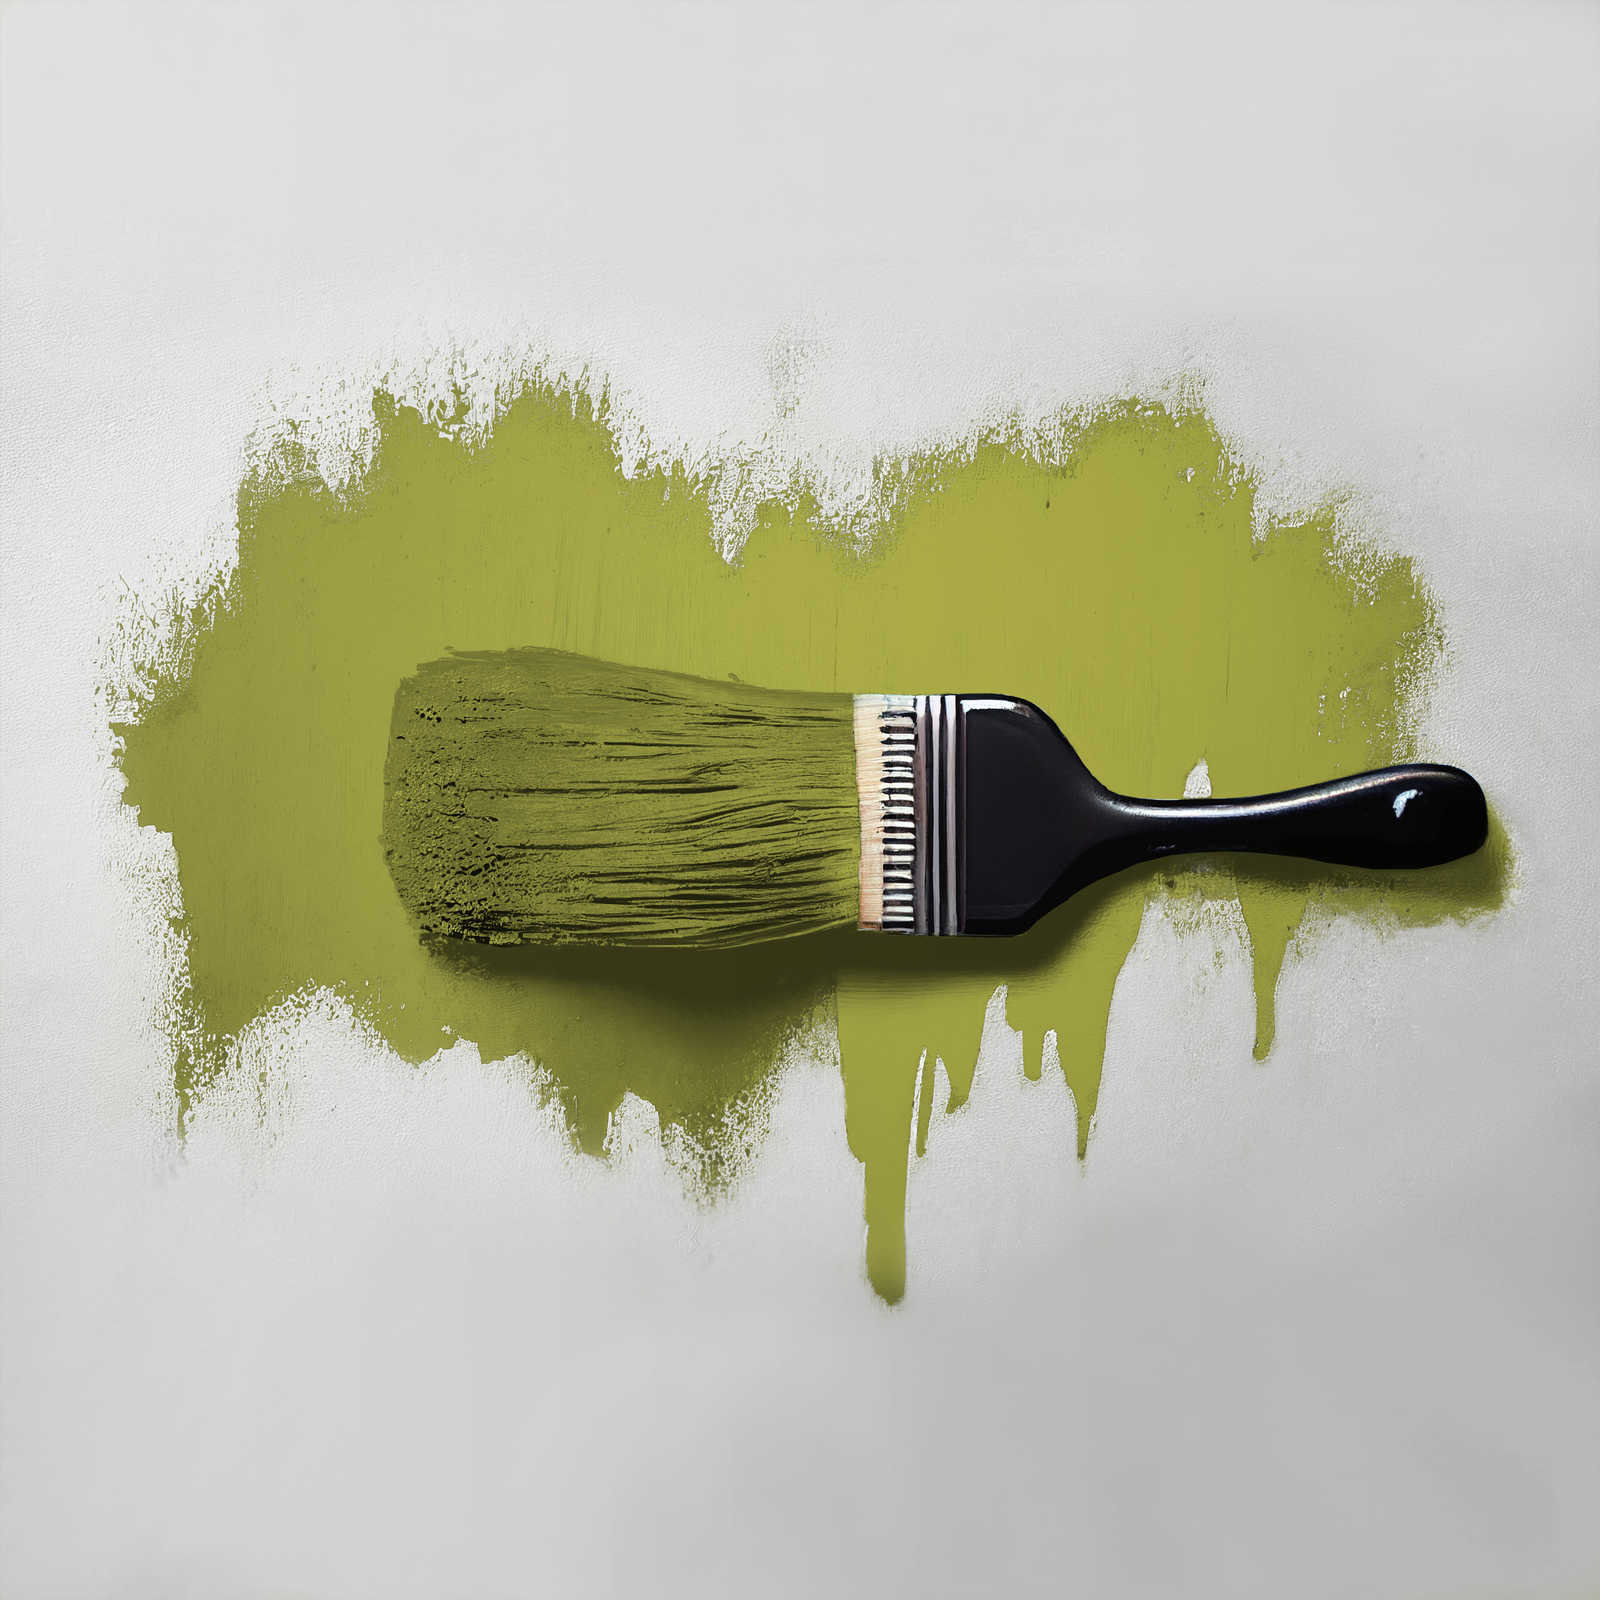             Wandfarbe in knalligem Gelbgrün »Kitchy Kiwi« TCK4009 – 2,5 Liter
        